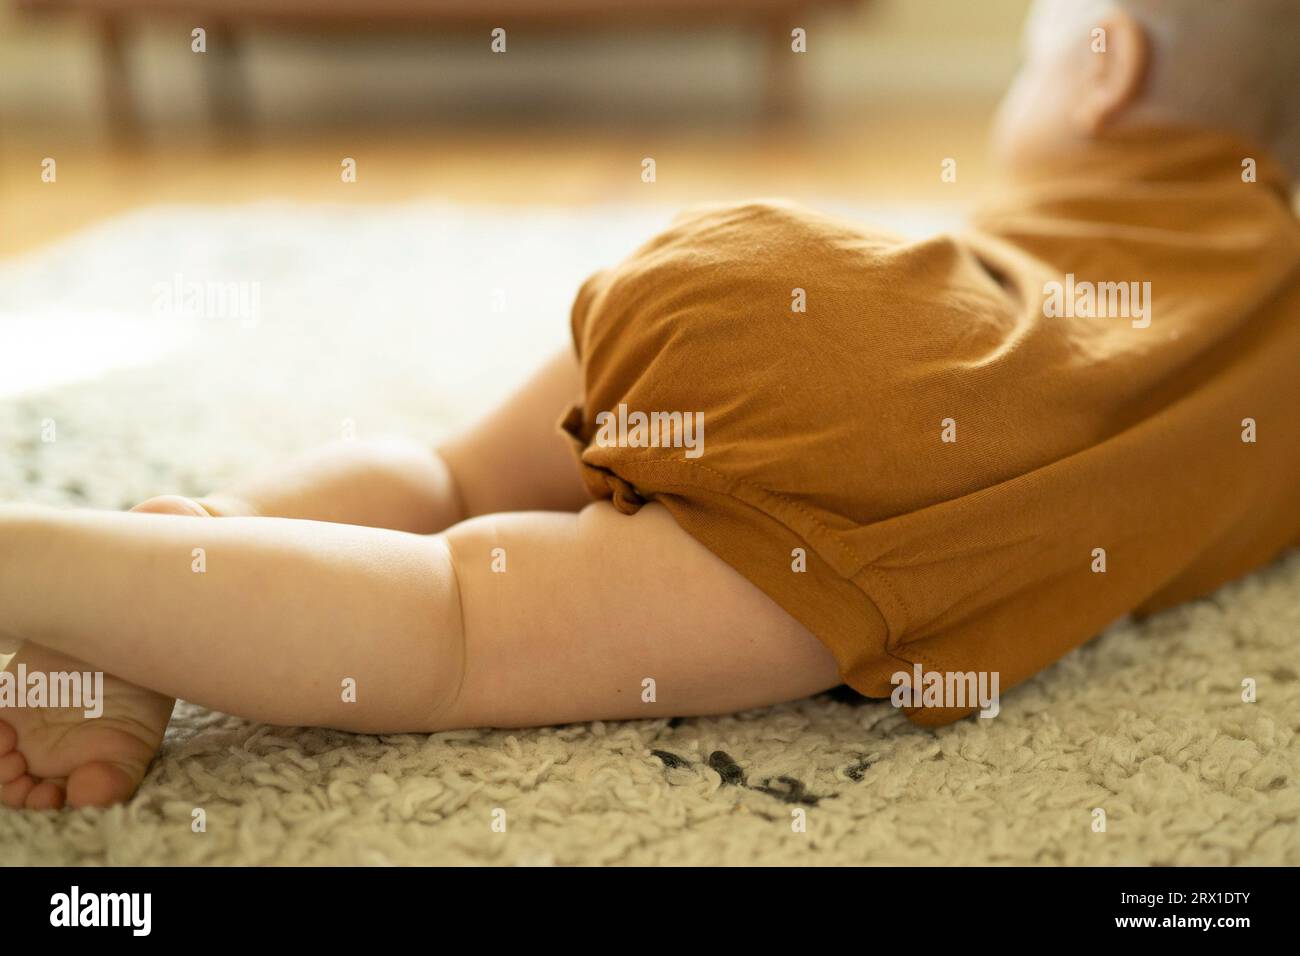 Blonde baby boy crawling; focus on legs against neutral shag rug. Stock Photo